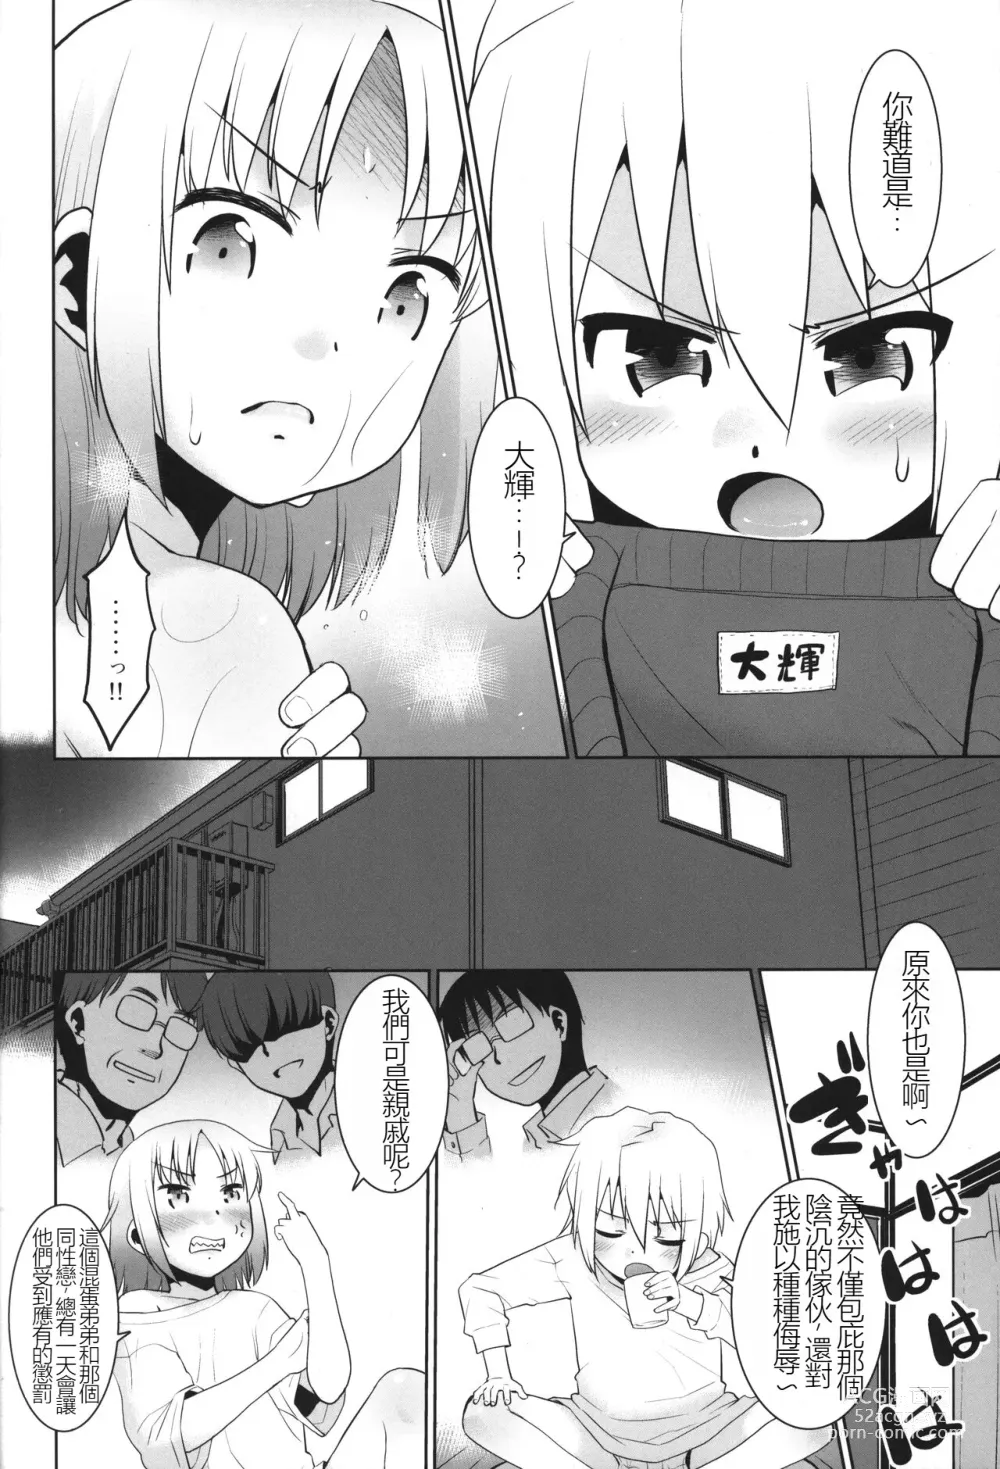 Page 7 of doujinshi Onii-chan vs Yankee